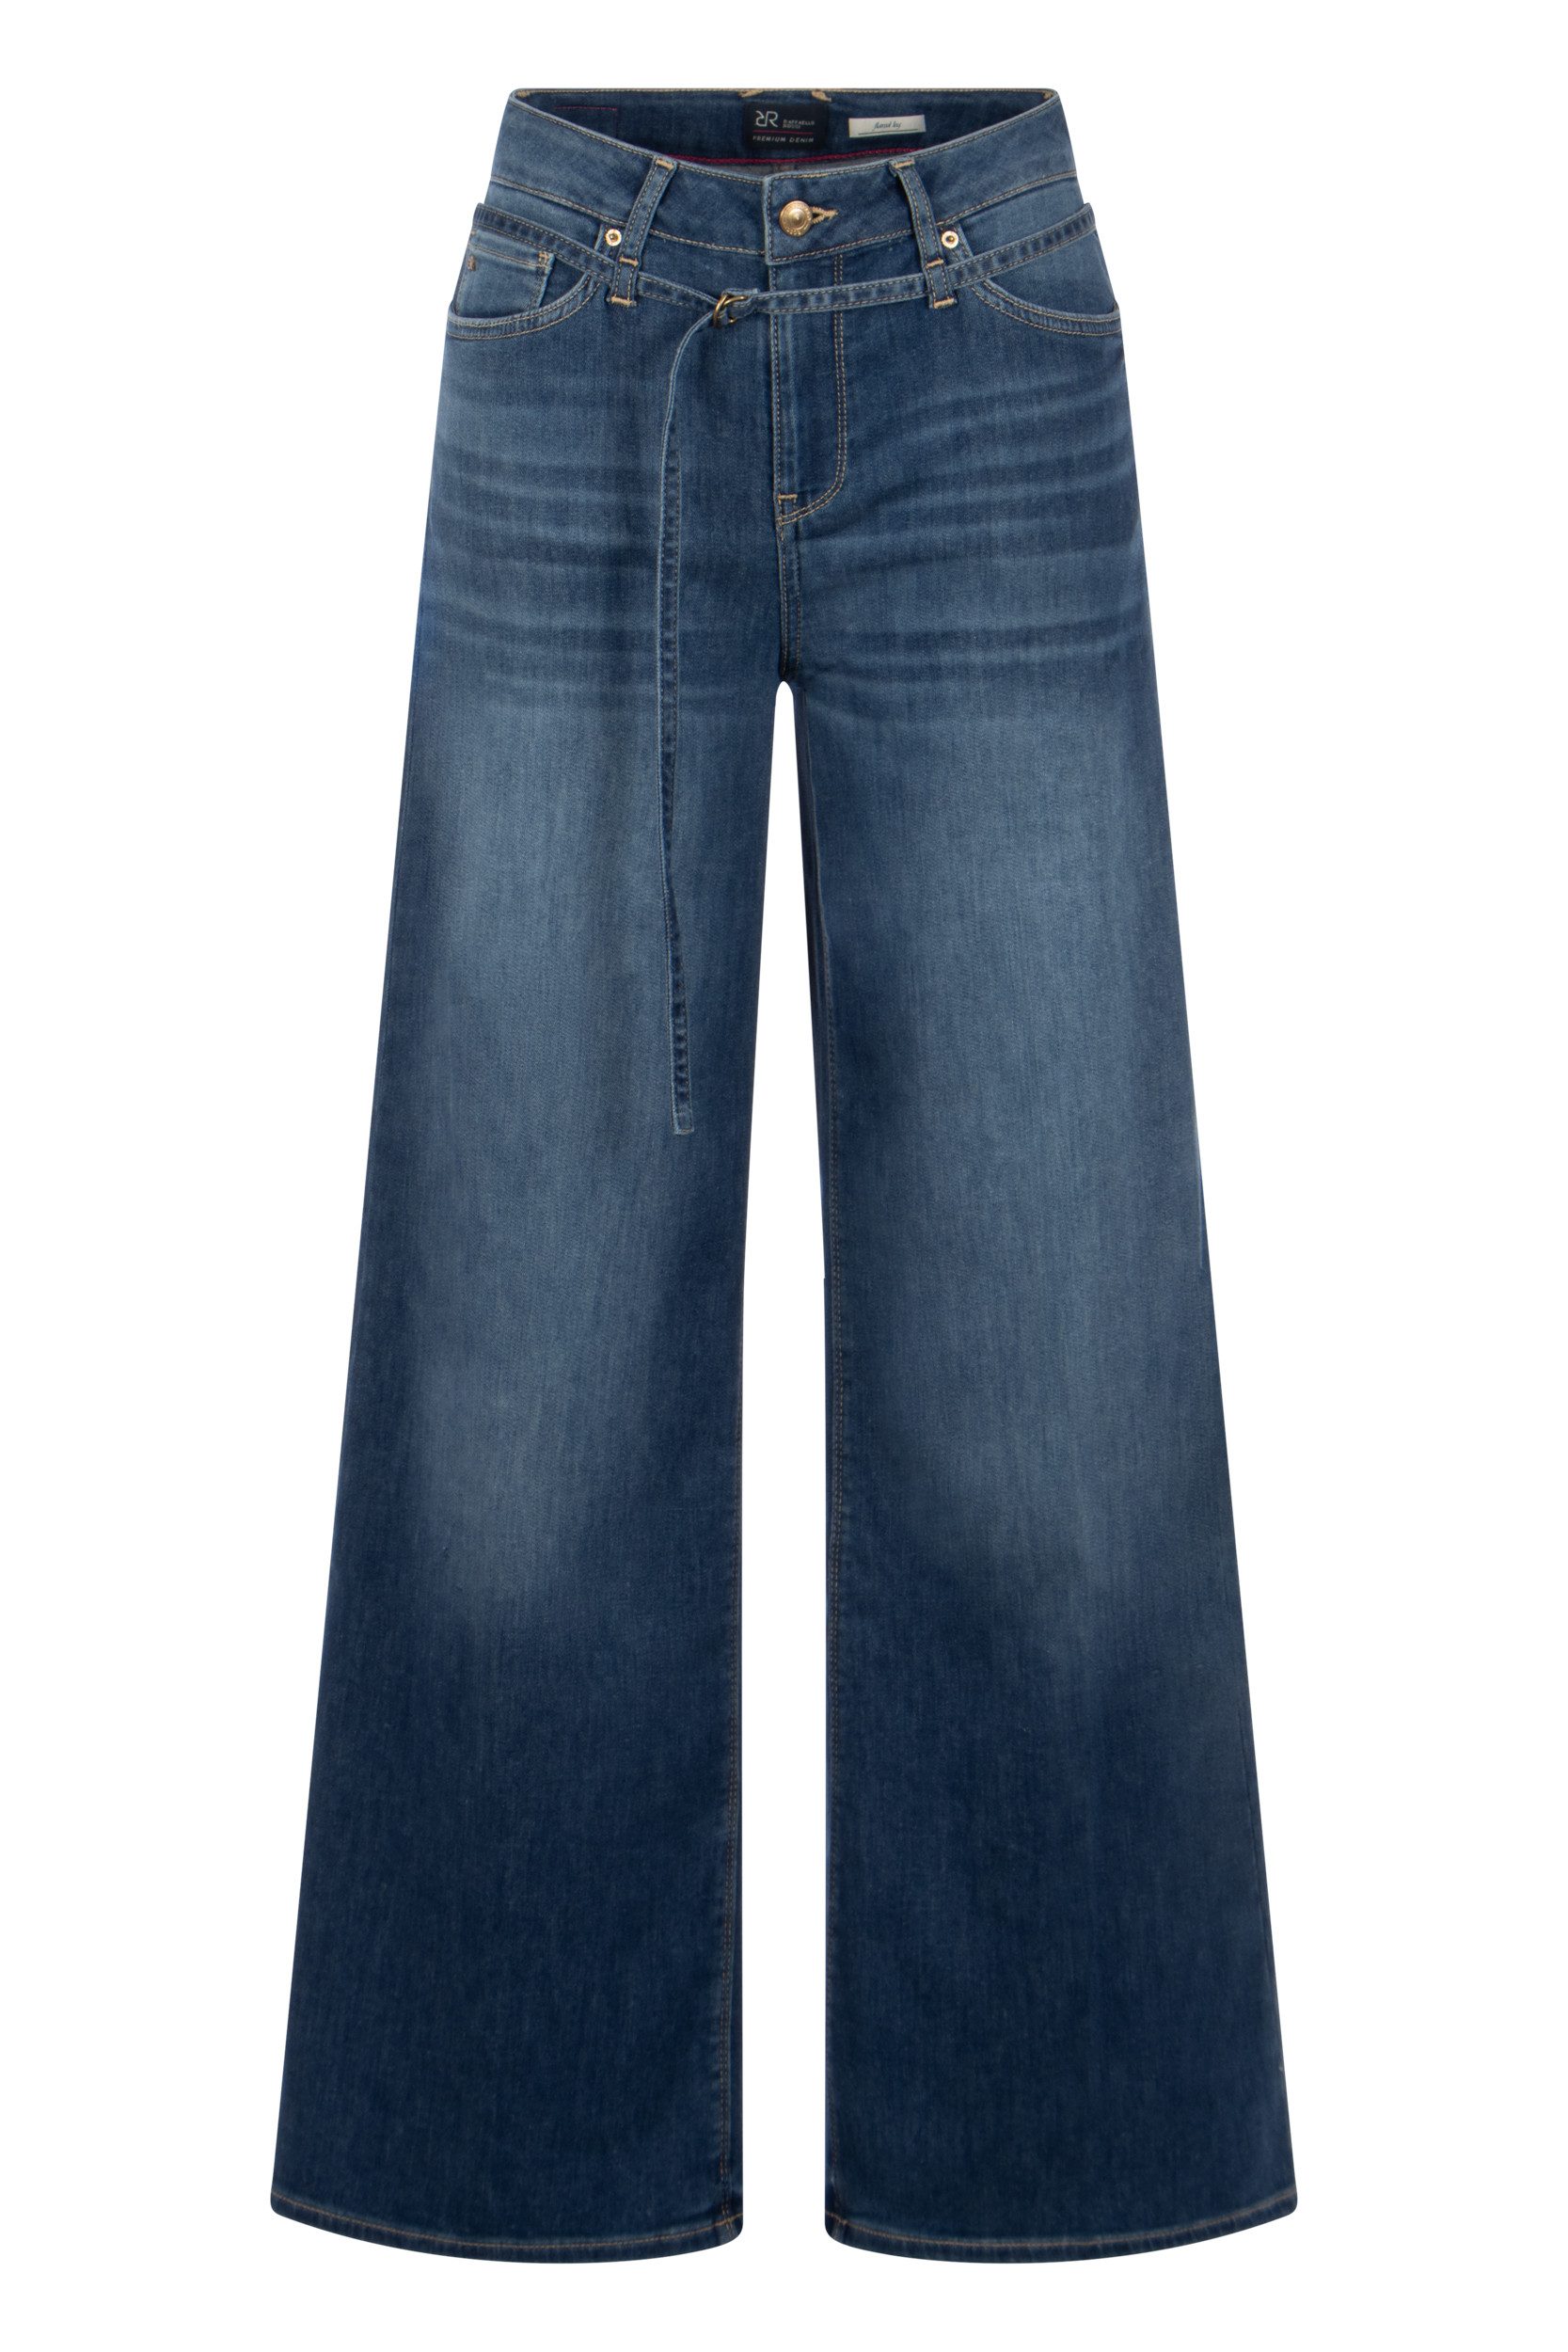 Raffaello Rossi 5-Pocket-Jeans Sventy B